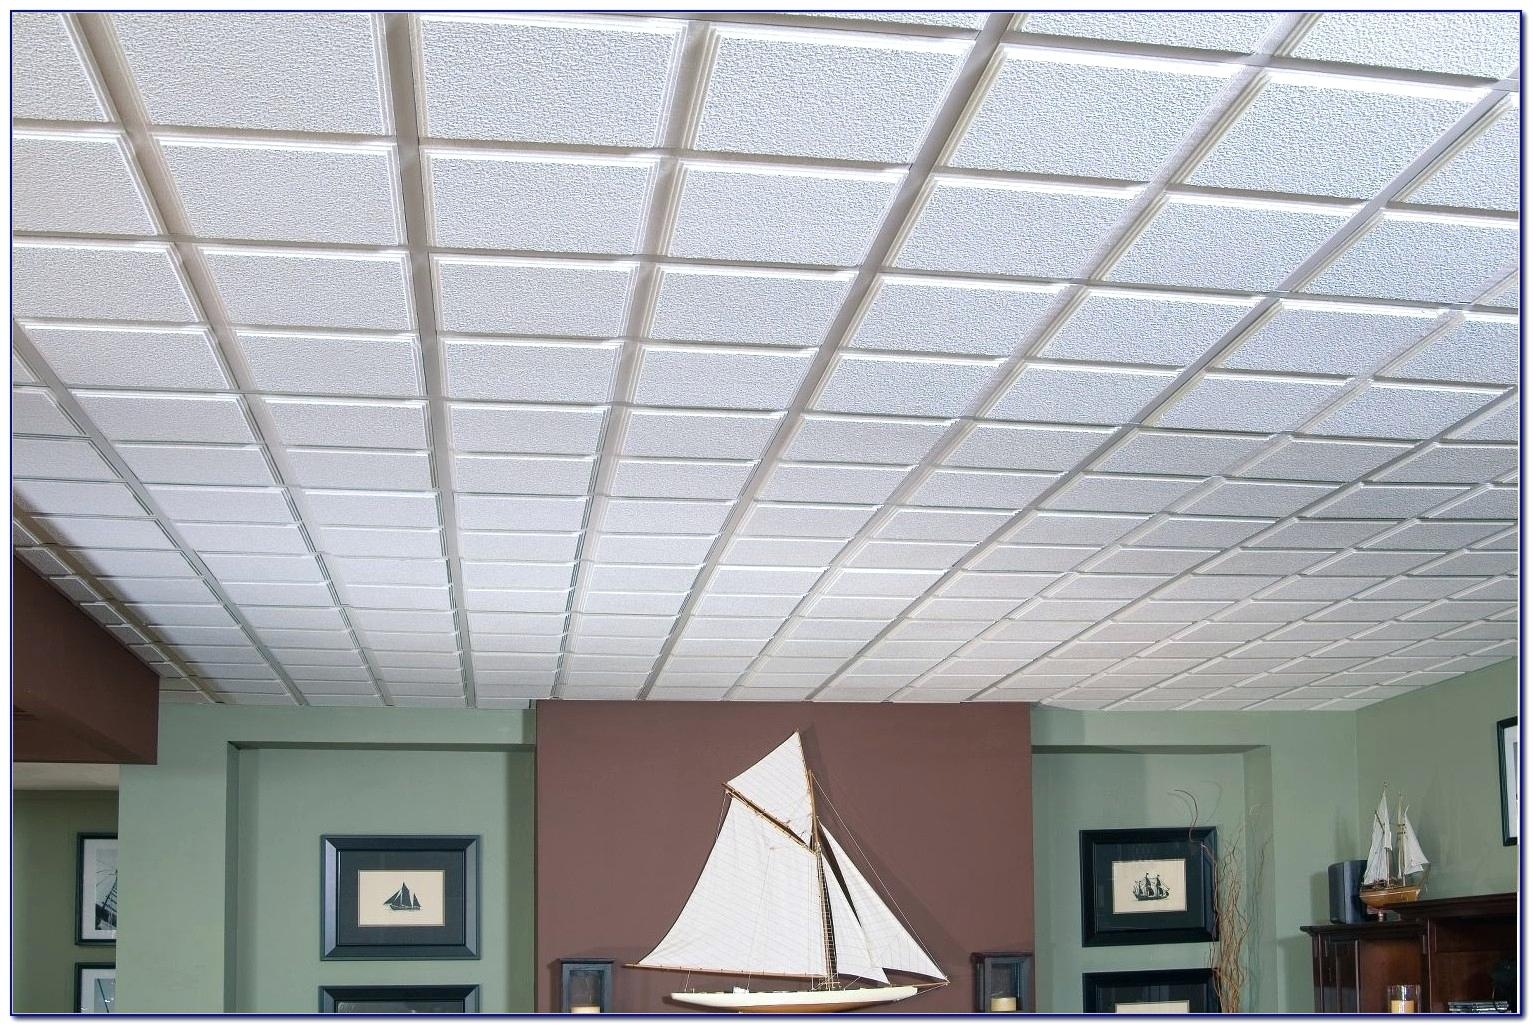 2x4 Ceiling Tiles That Look Like 2x2 2×4 Ceiling Tiles That Look Like 2×2 2x4 ceiling tiles that look like 2x2 ceiling tiles 1533 X 1027